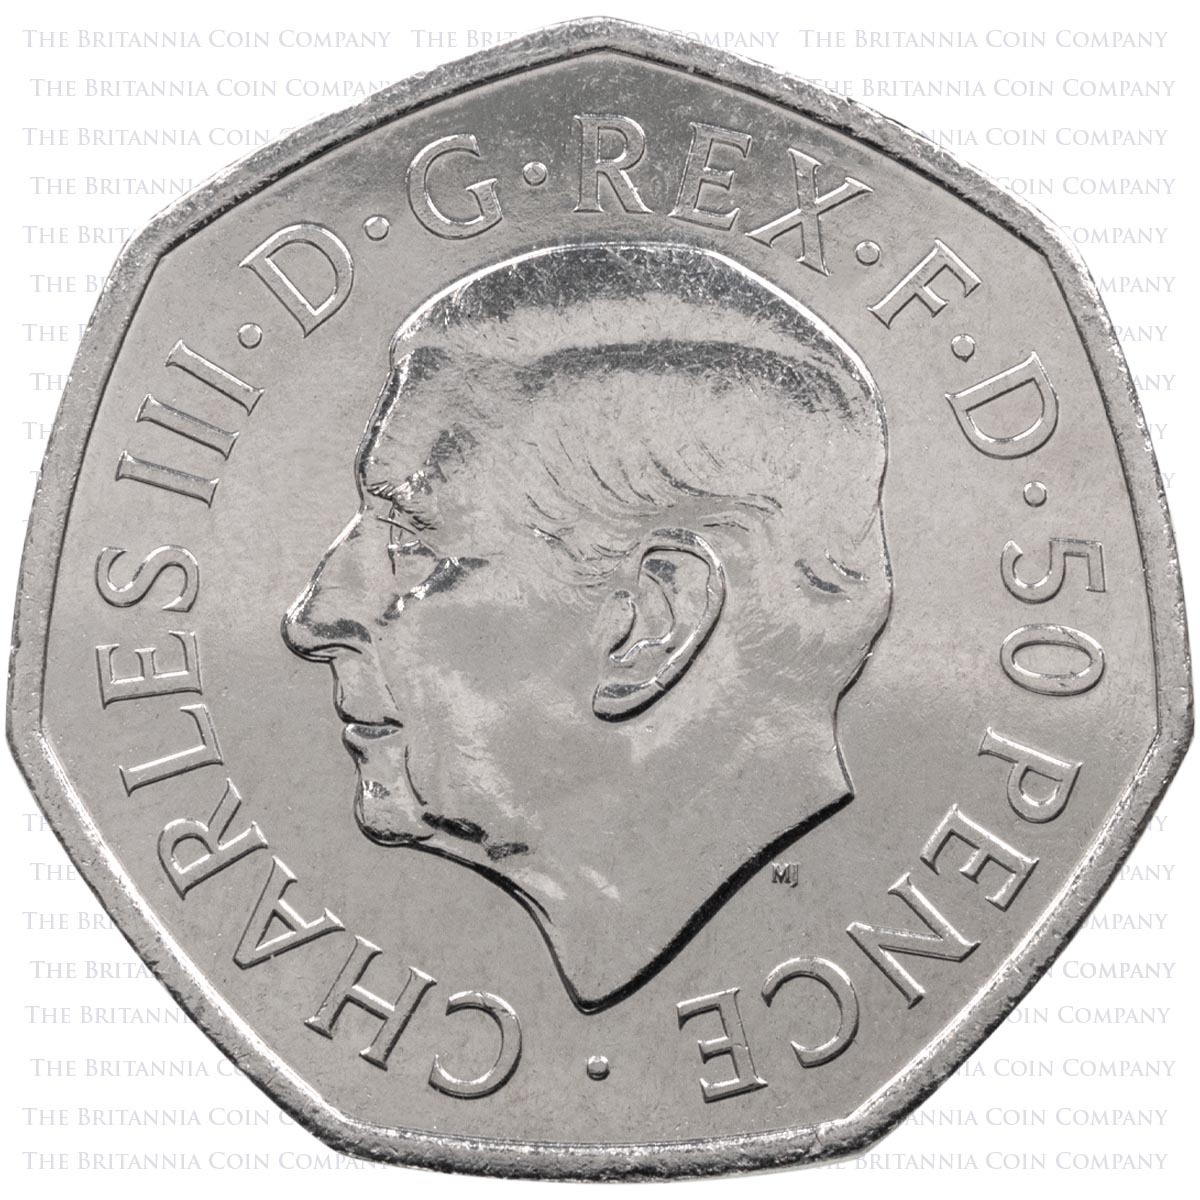 2022 Queen Elizabeth II Memorial Circulated Fifty Pence Coin Obverse